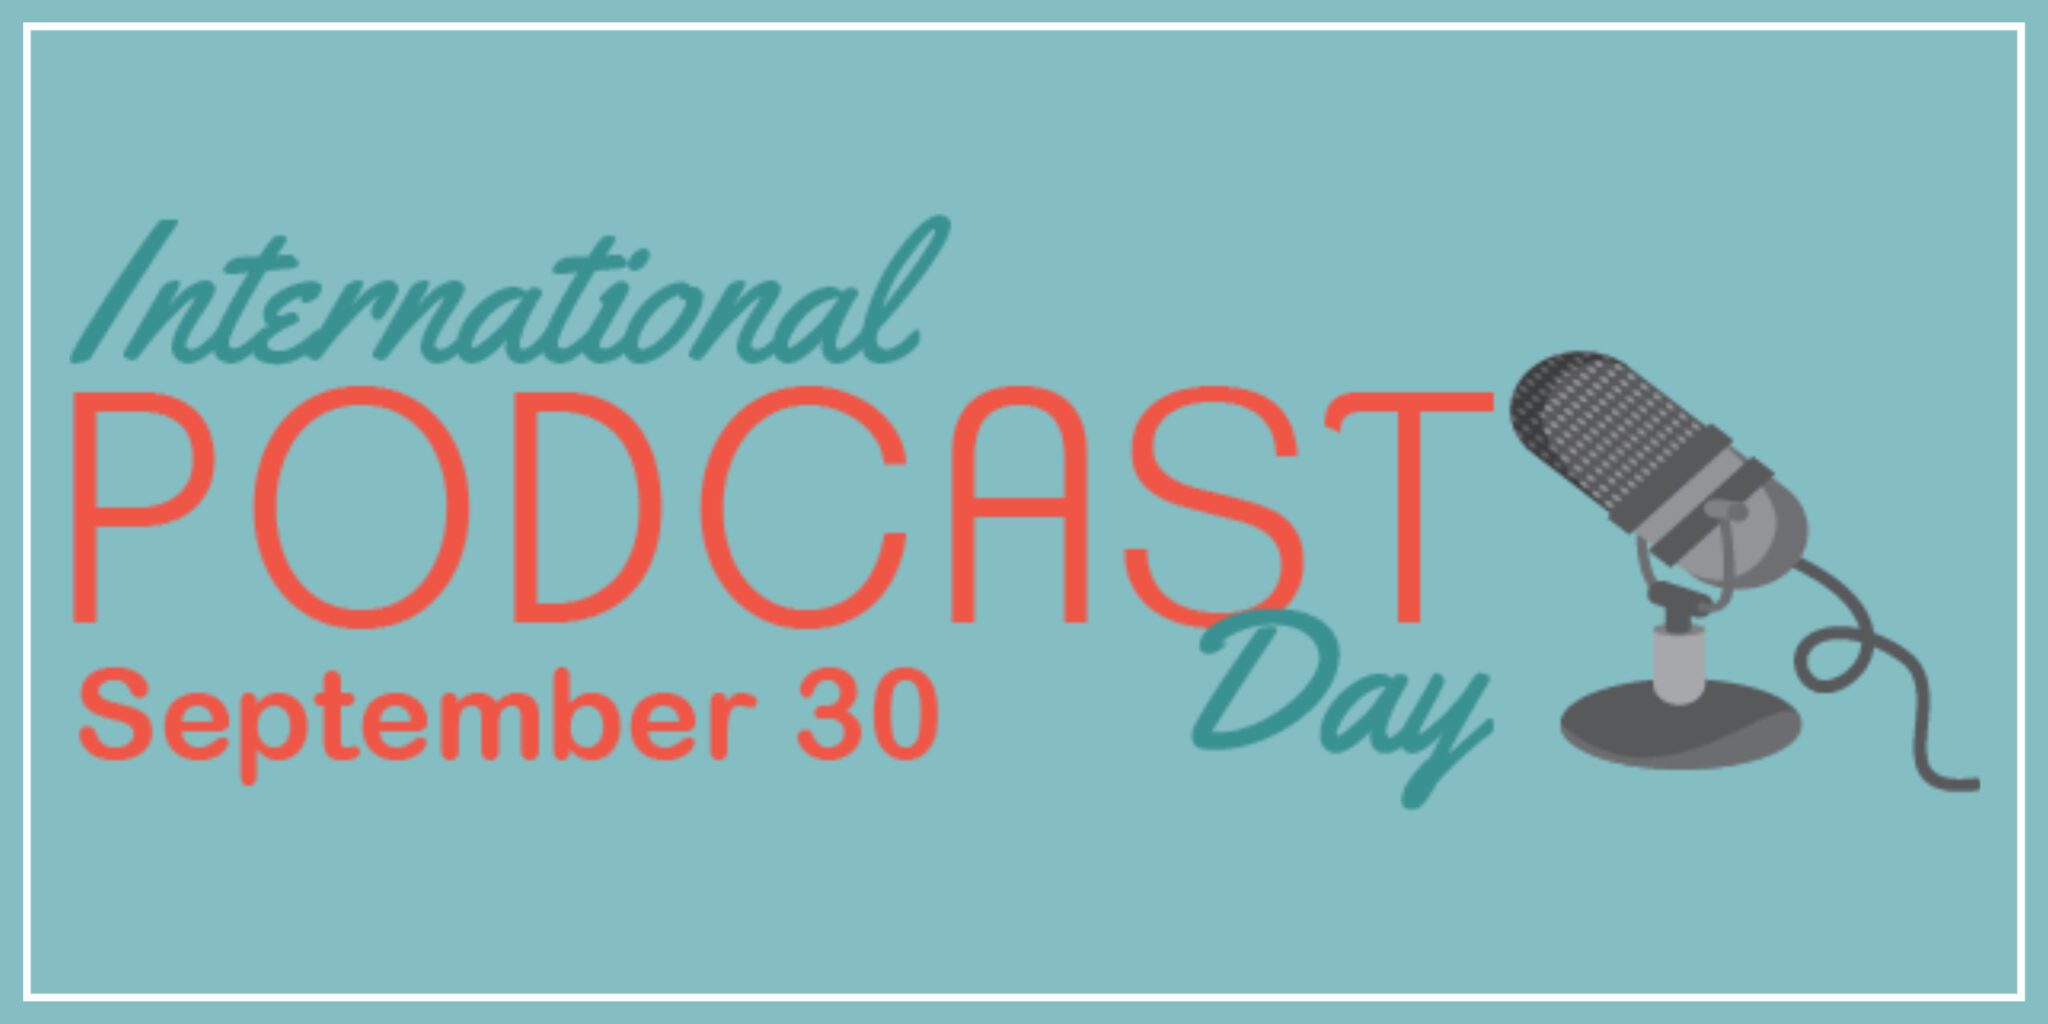 Join Us in Celebrating International Podcast Day